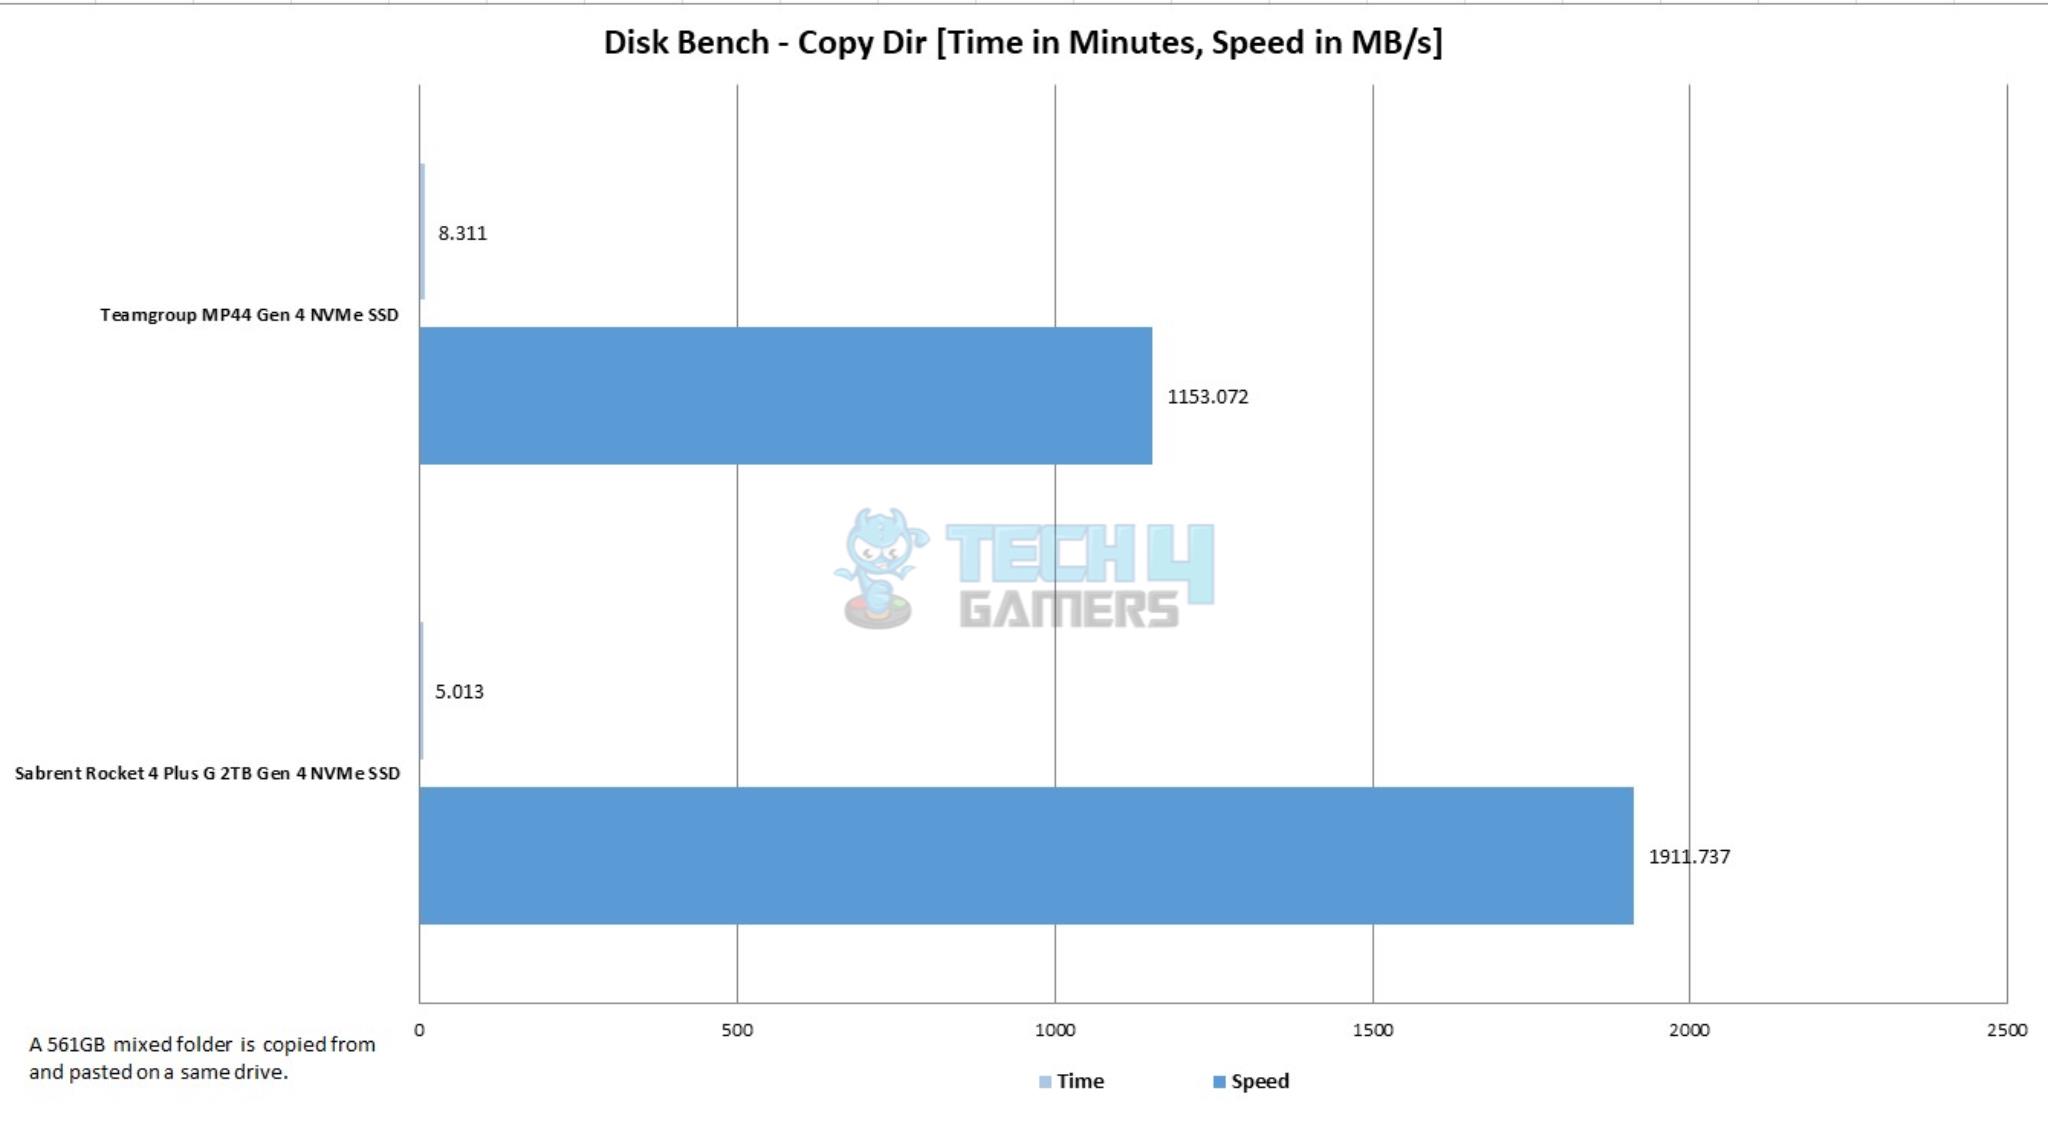 Sabrent Rocket 4 Plus G 2TB NVMe SSD — Disk Bench Copy Dir 561GB